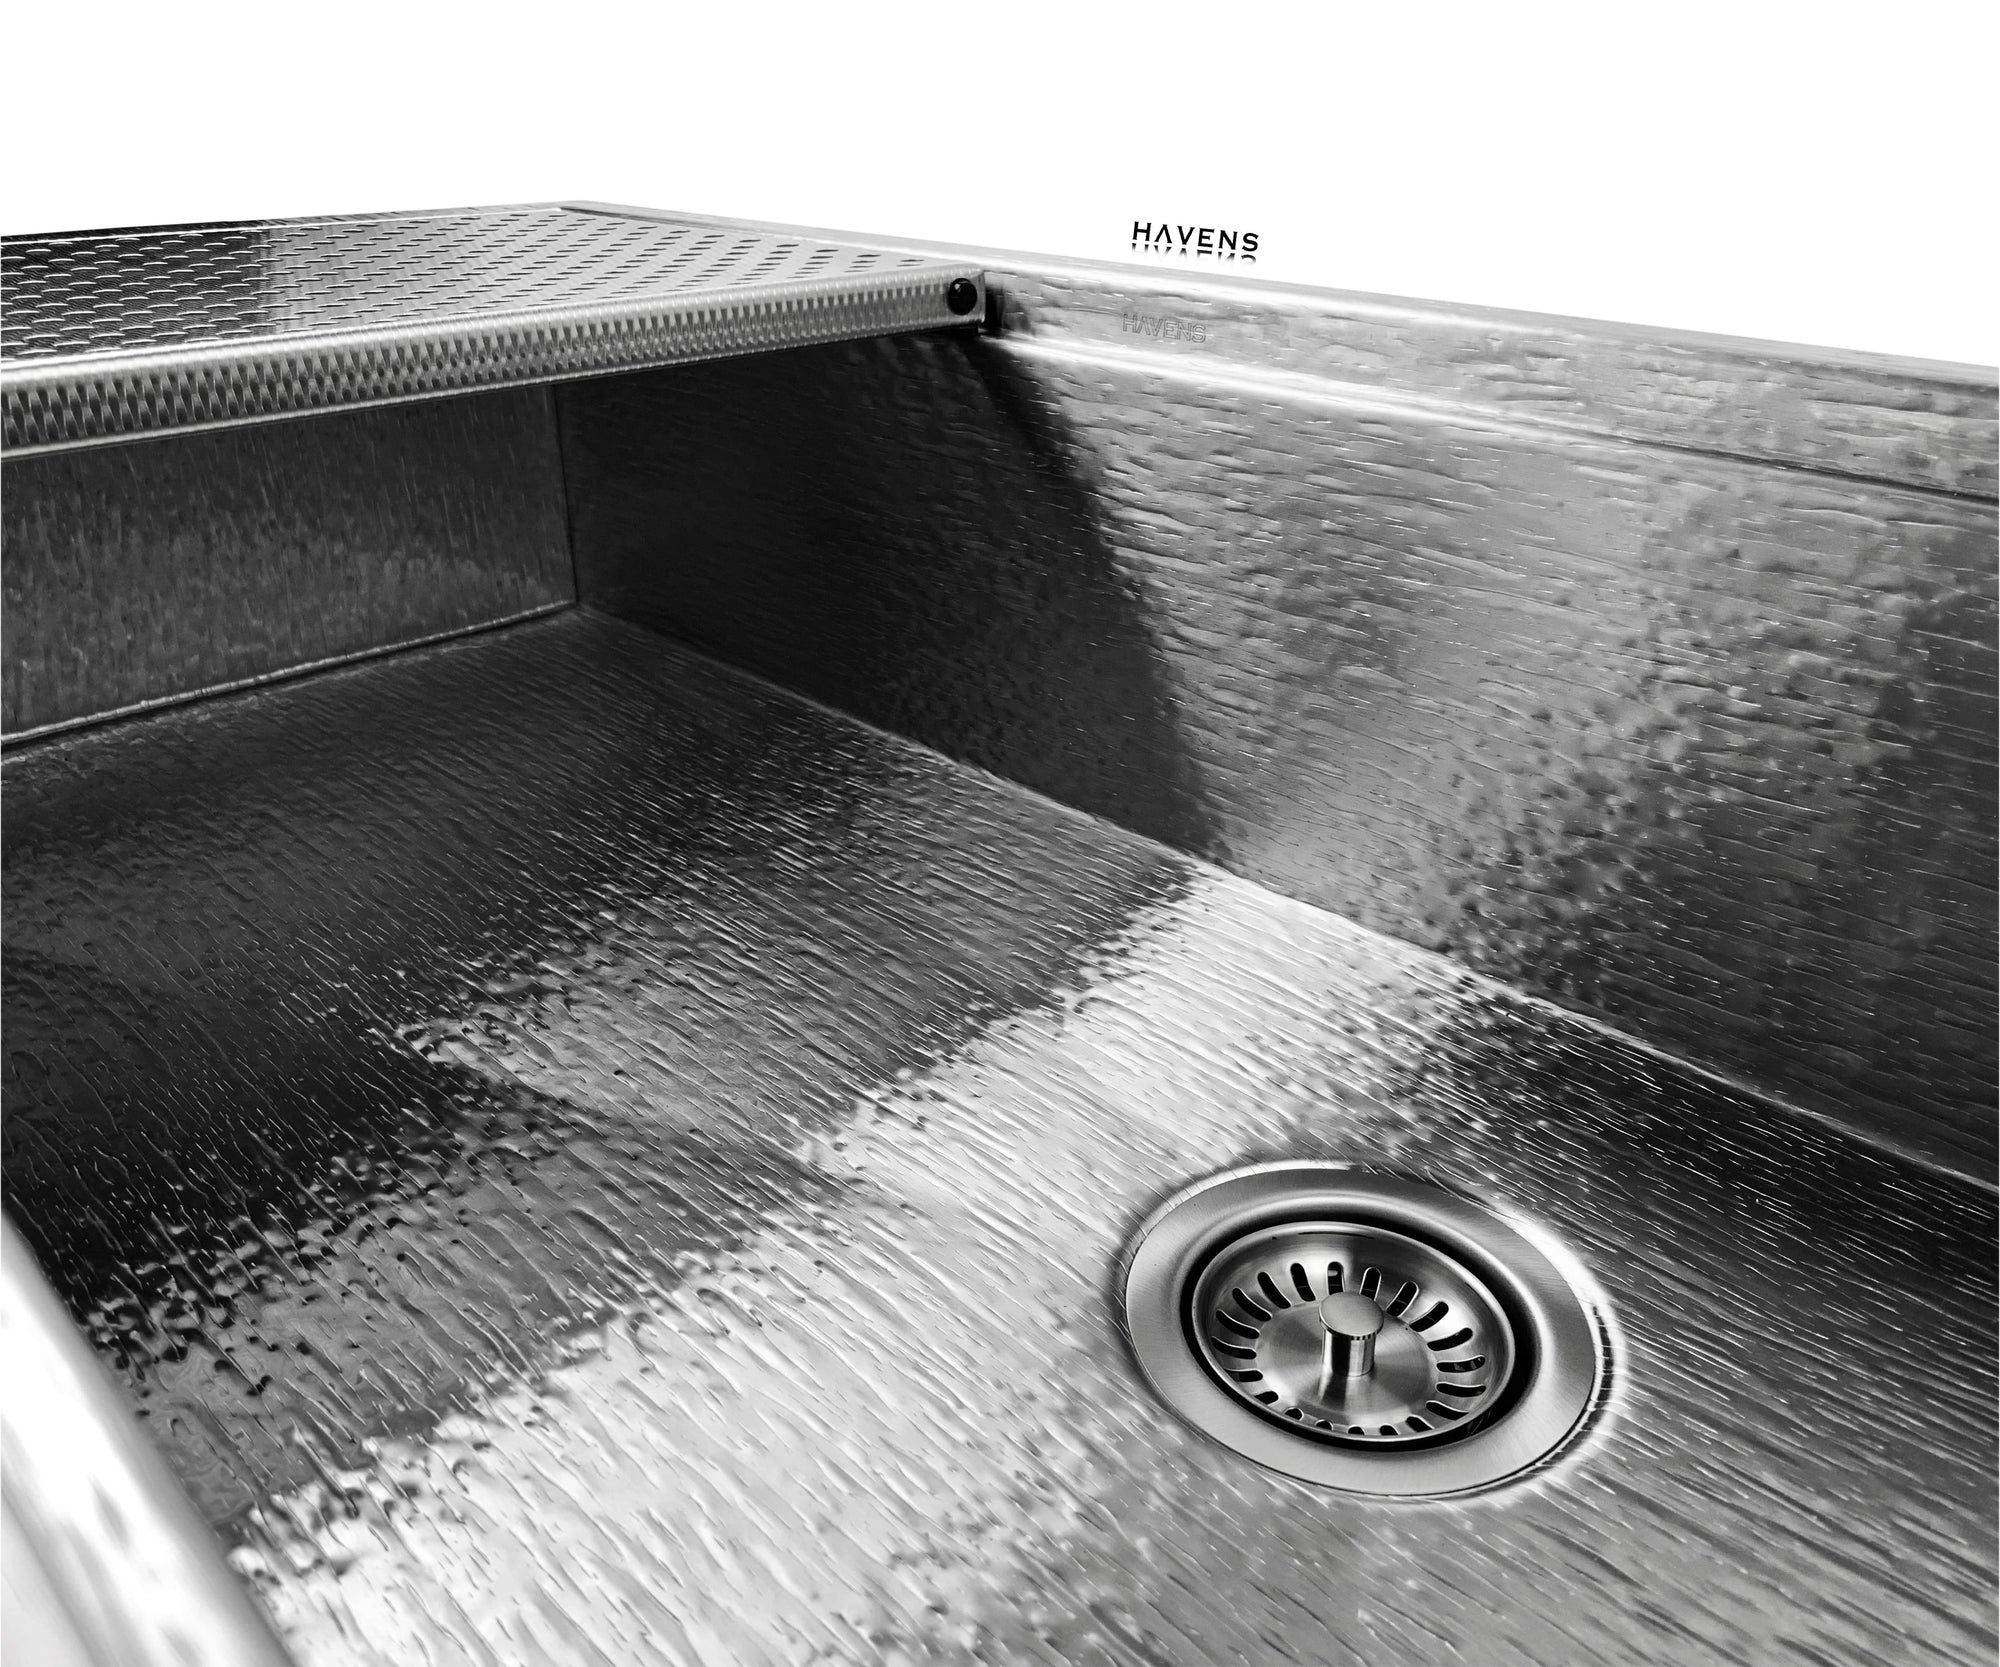 Custom Undermount Sink  - Stainless Steel